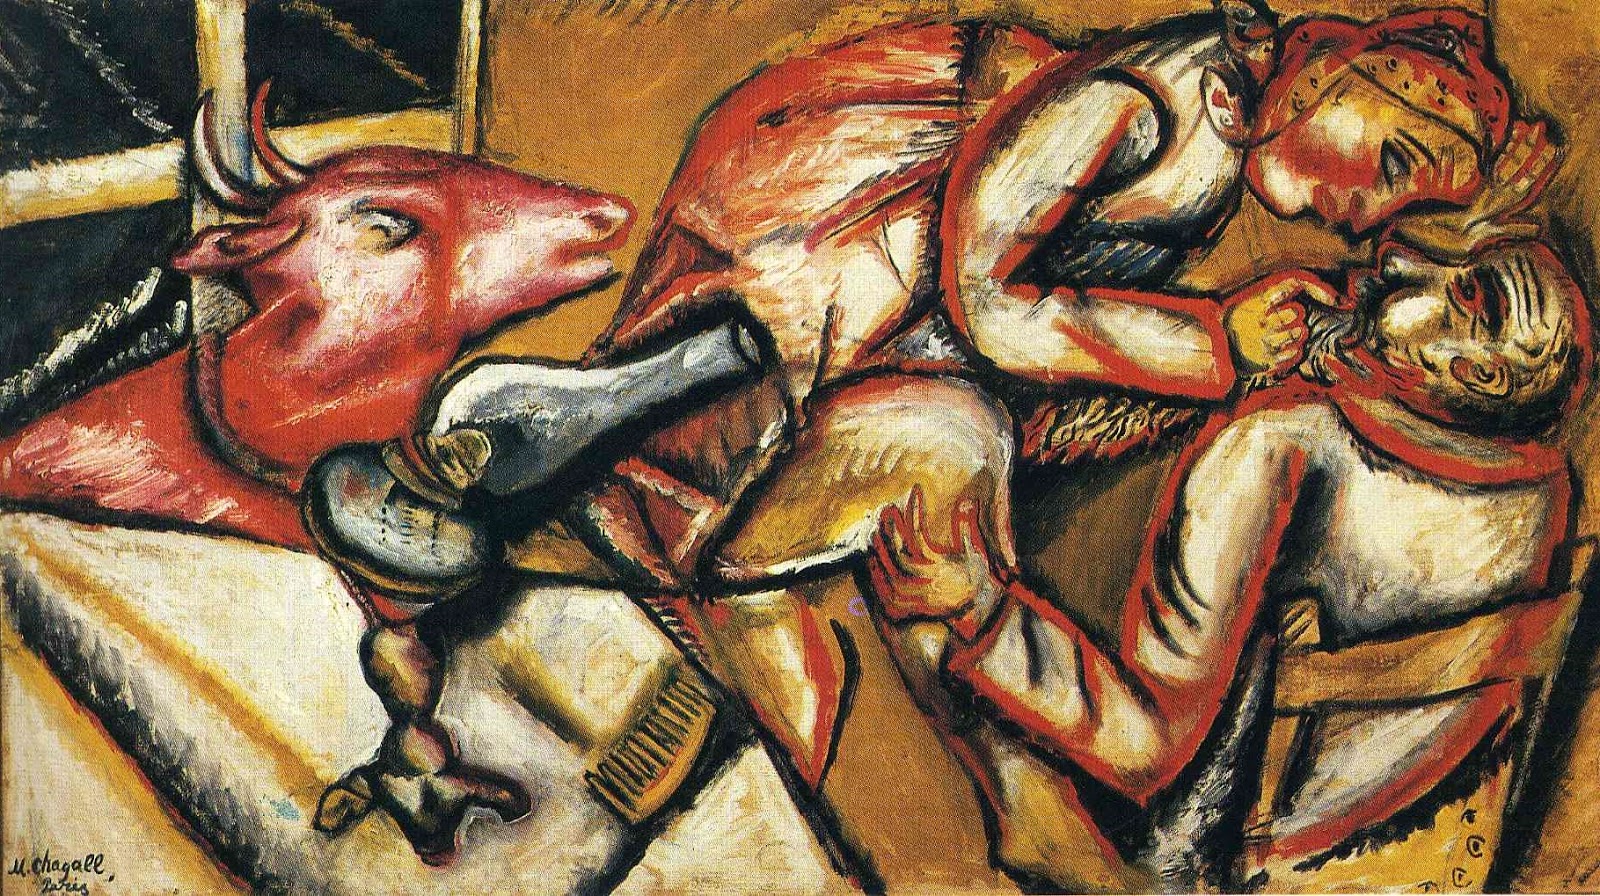 Marc+Chagall-1887-1985 (392).jpg